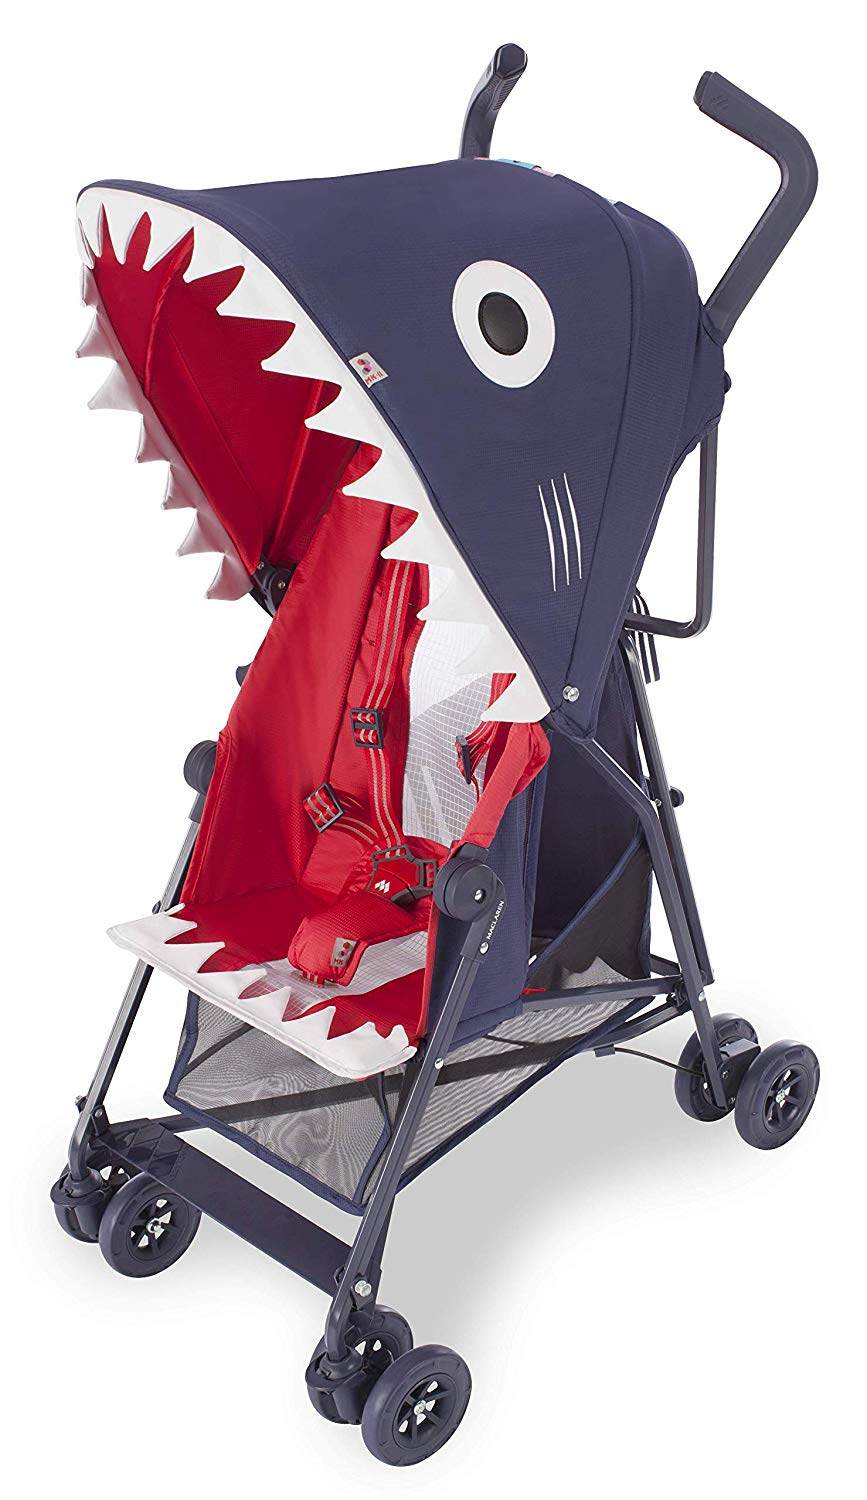 Maclaren Mark II Shark stroller - super light, multi-position seat, with accessories